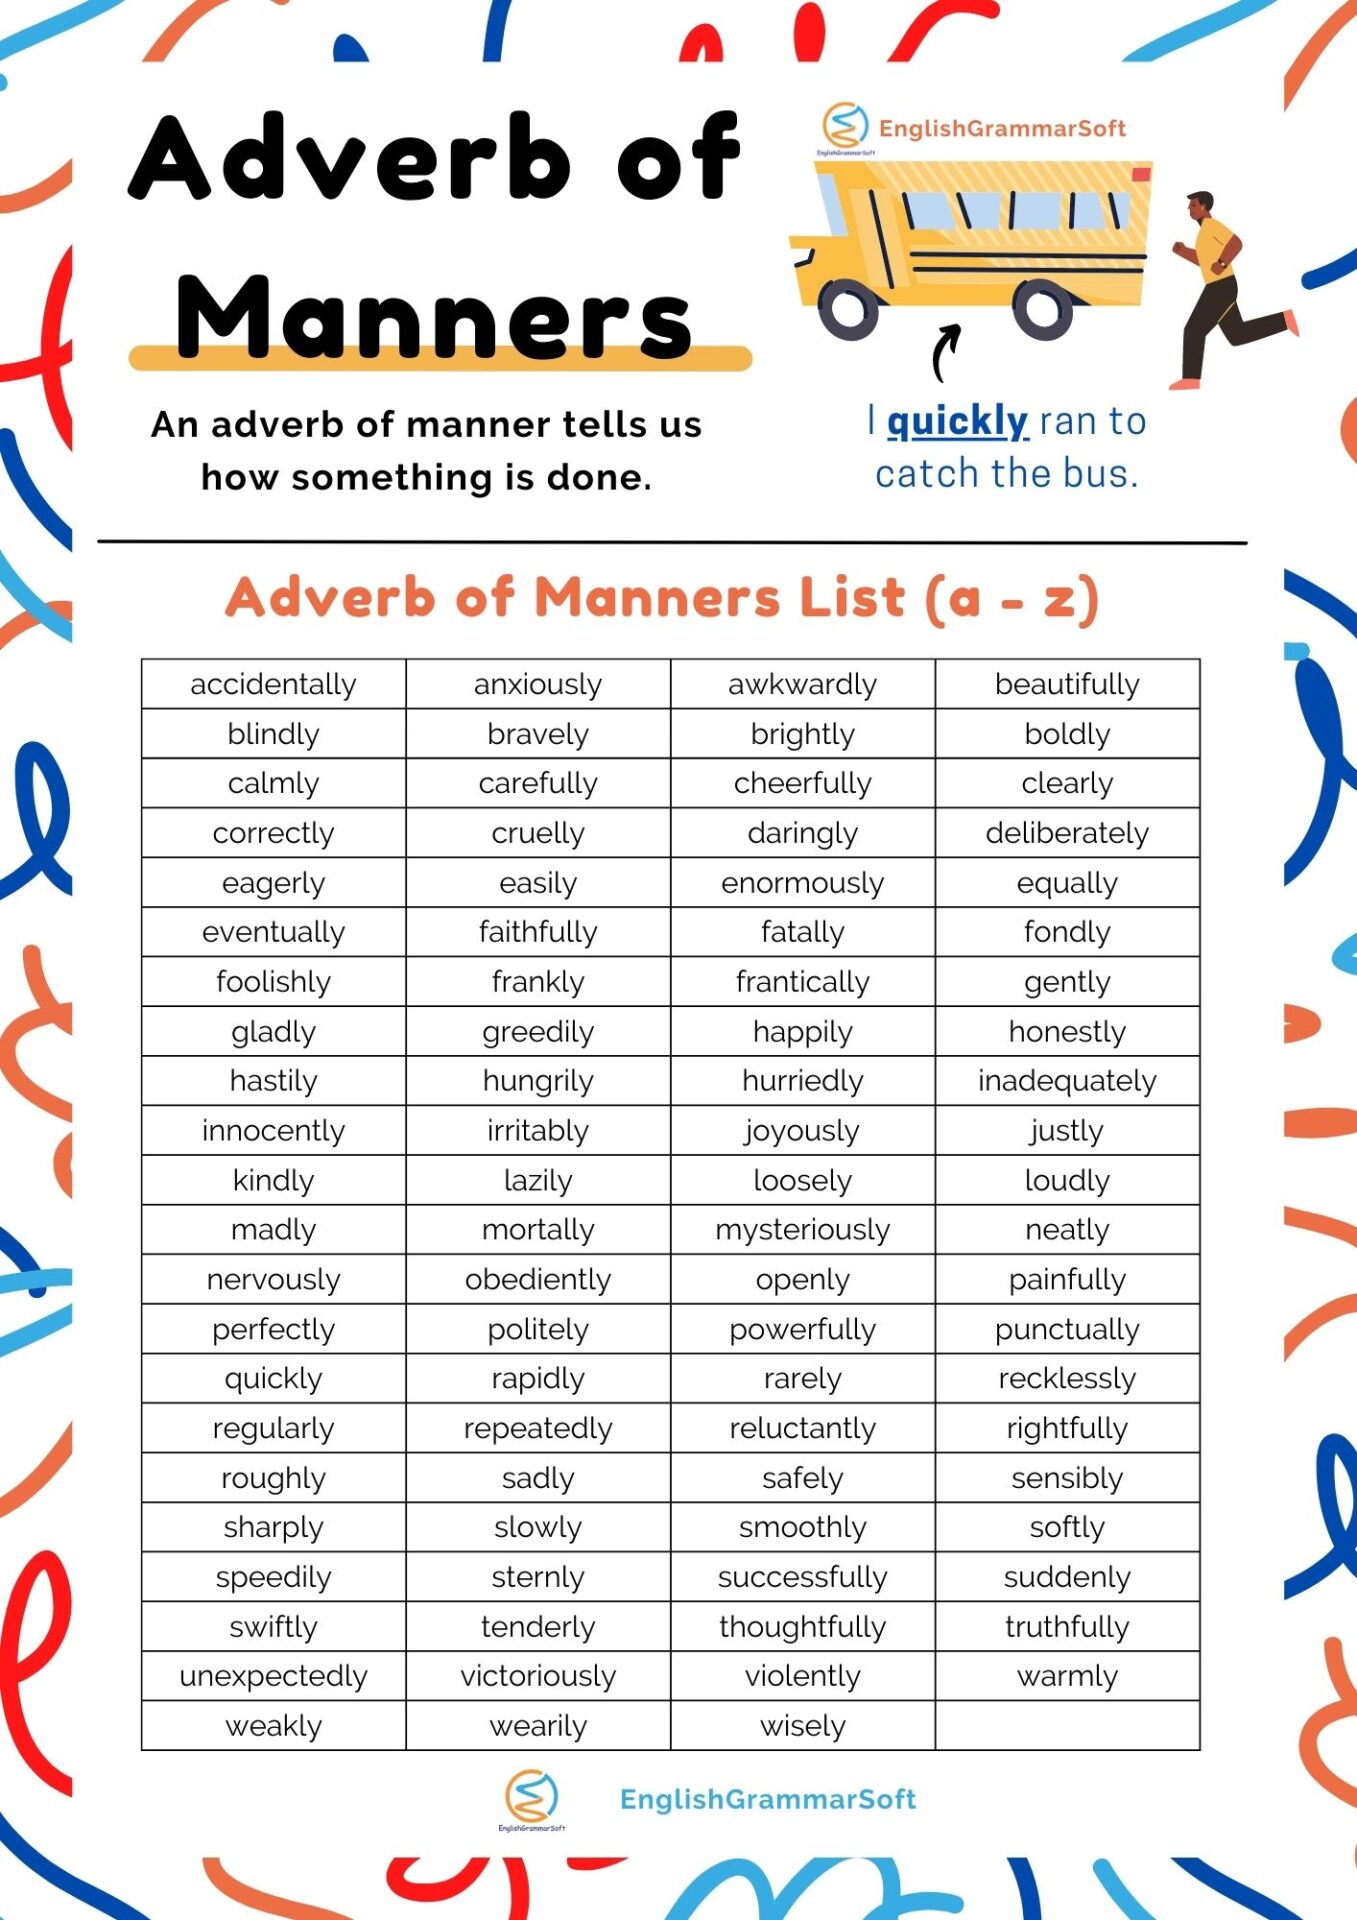 Adverb of Manner List